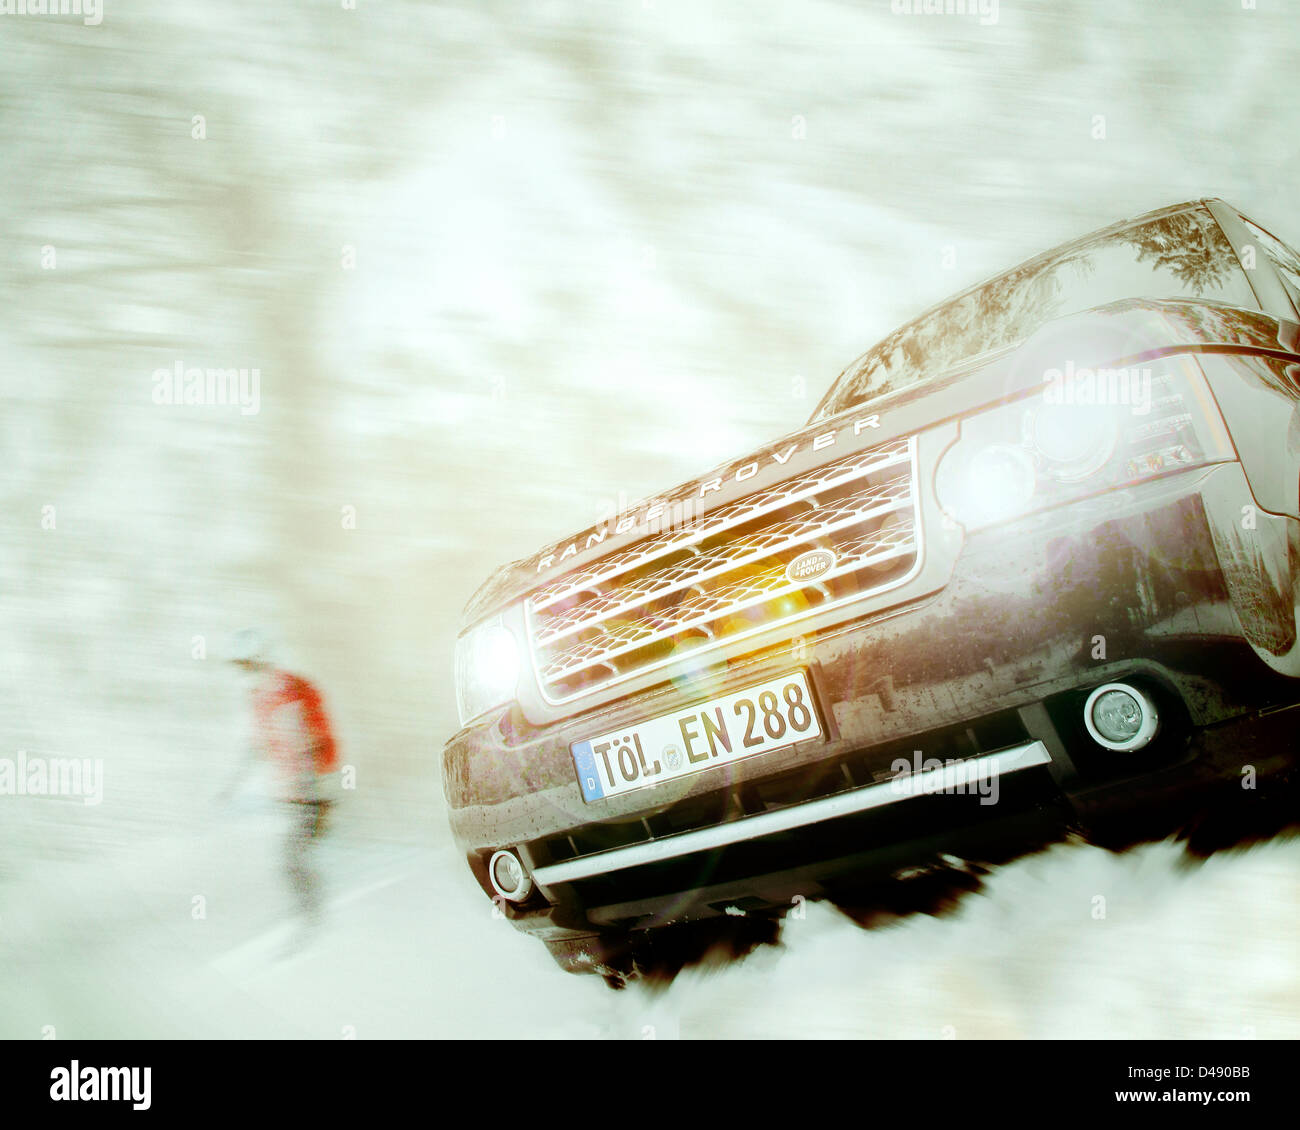 SPORT INVERNALI: Uomo e macchina (2011 Range Rover) Foto Stock